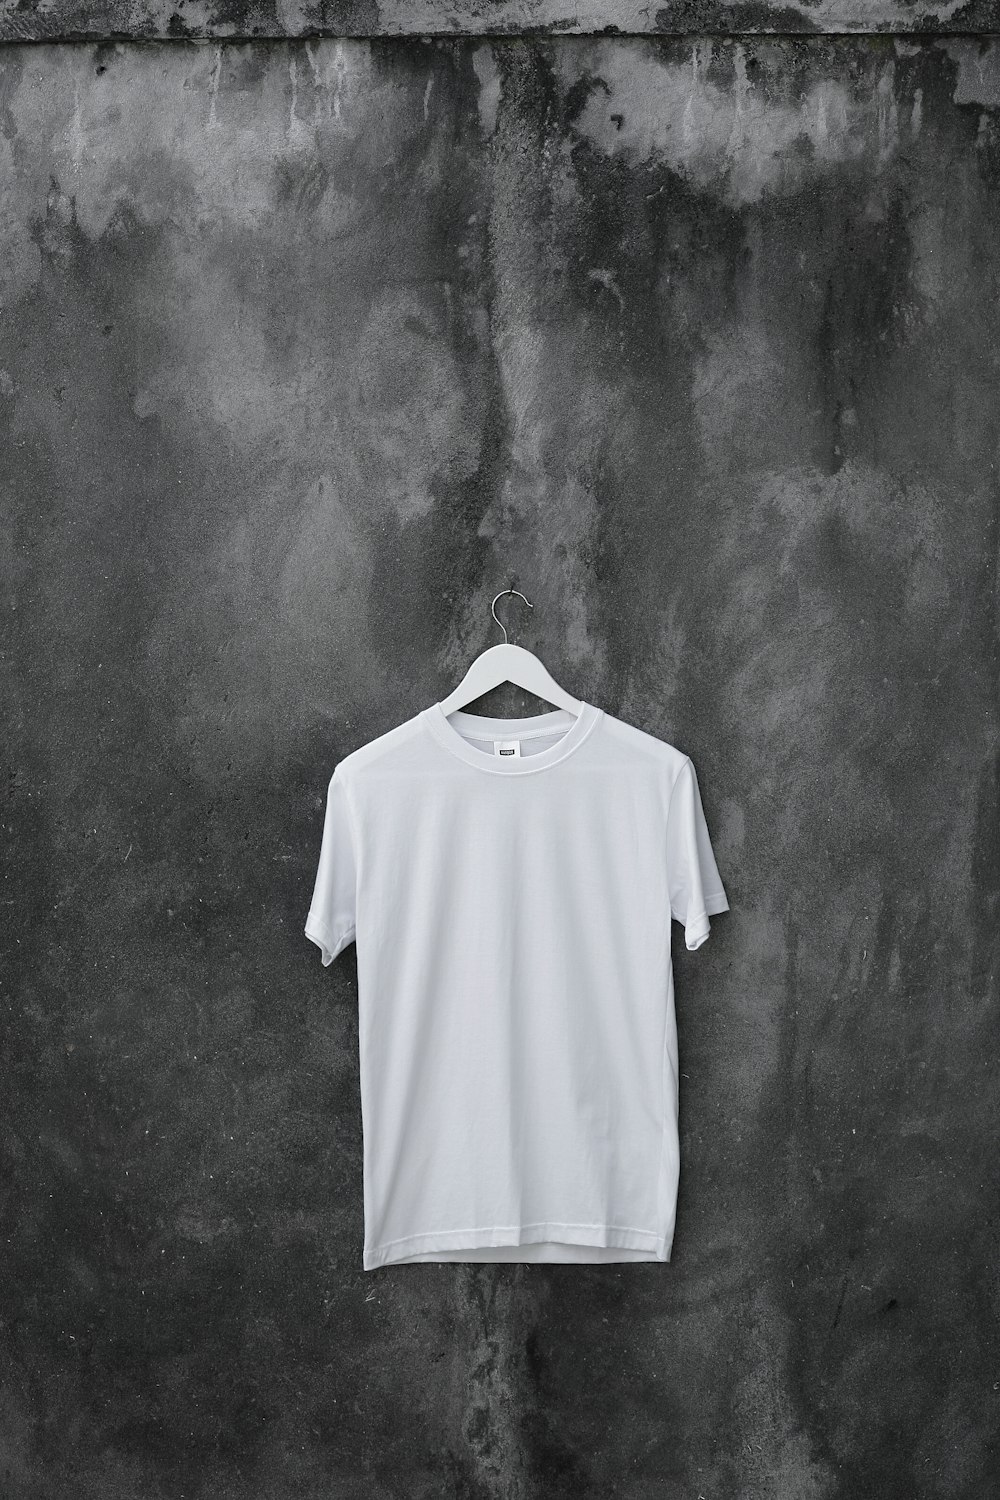 1000+ Black T Shirt Pictures  Download Free Images on Unsplash